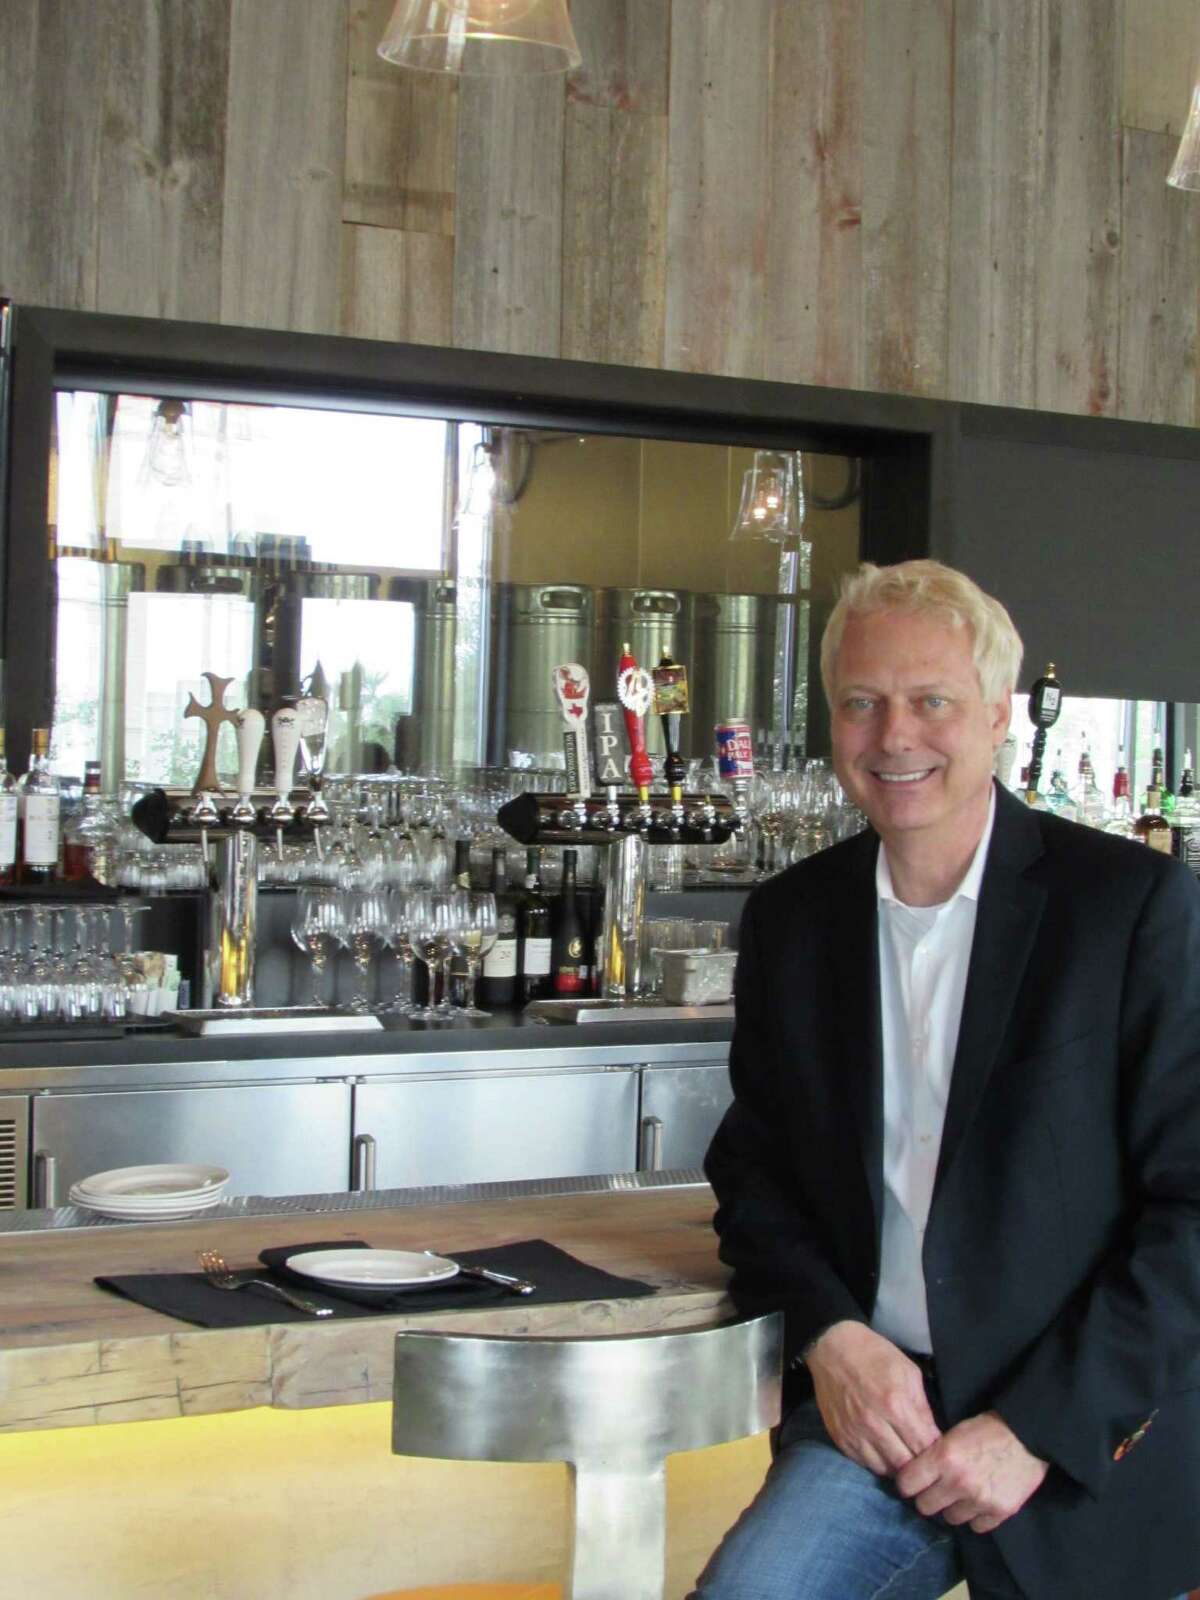 Dan Ward, general manager of Piatti Ristorante & Bar, shows his newest Piatti facility at Éilan.